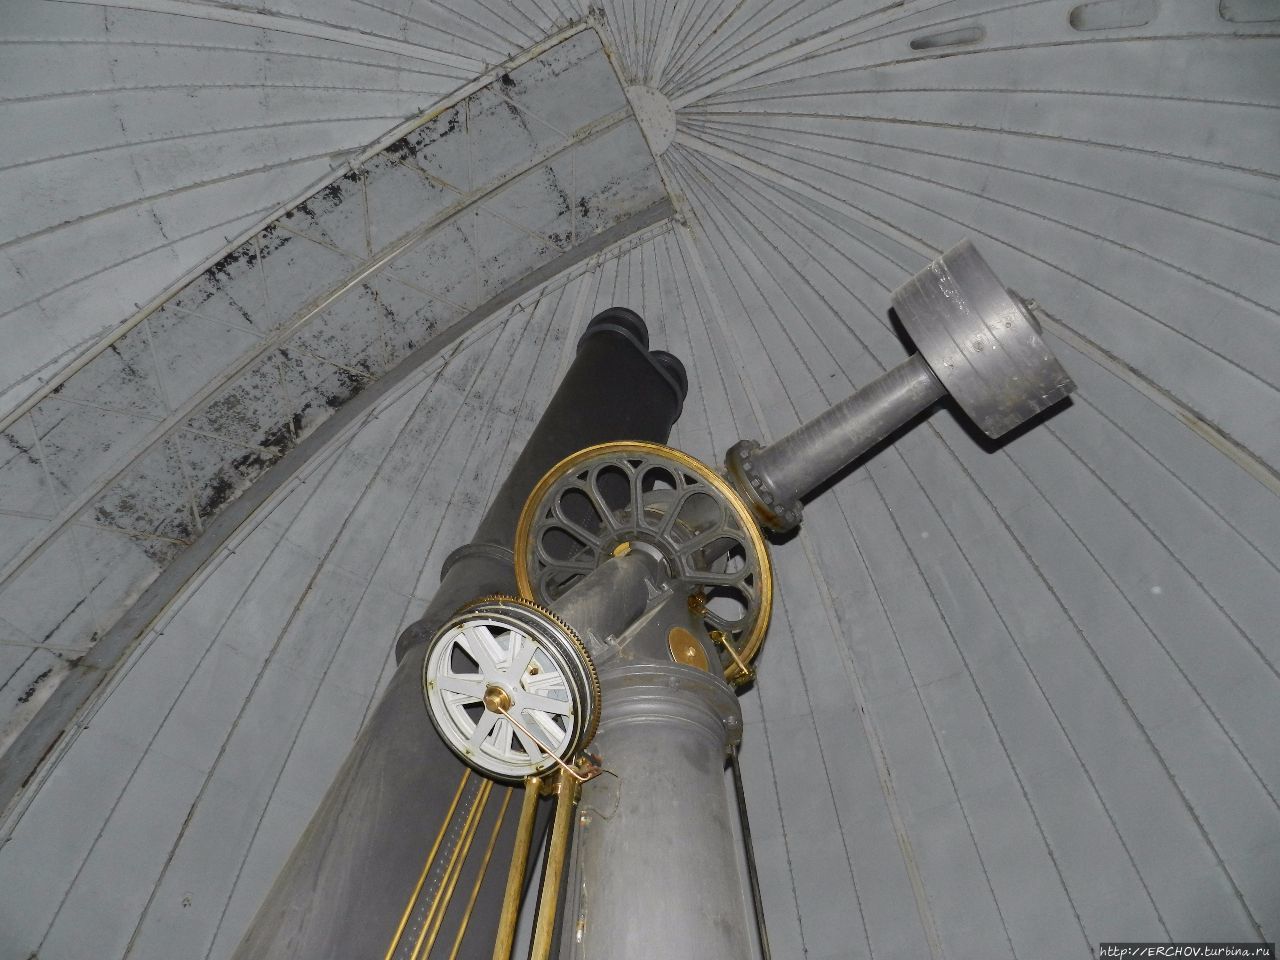 Обсерватория на Красной Пресне Москва, Россия